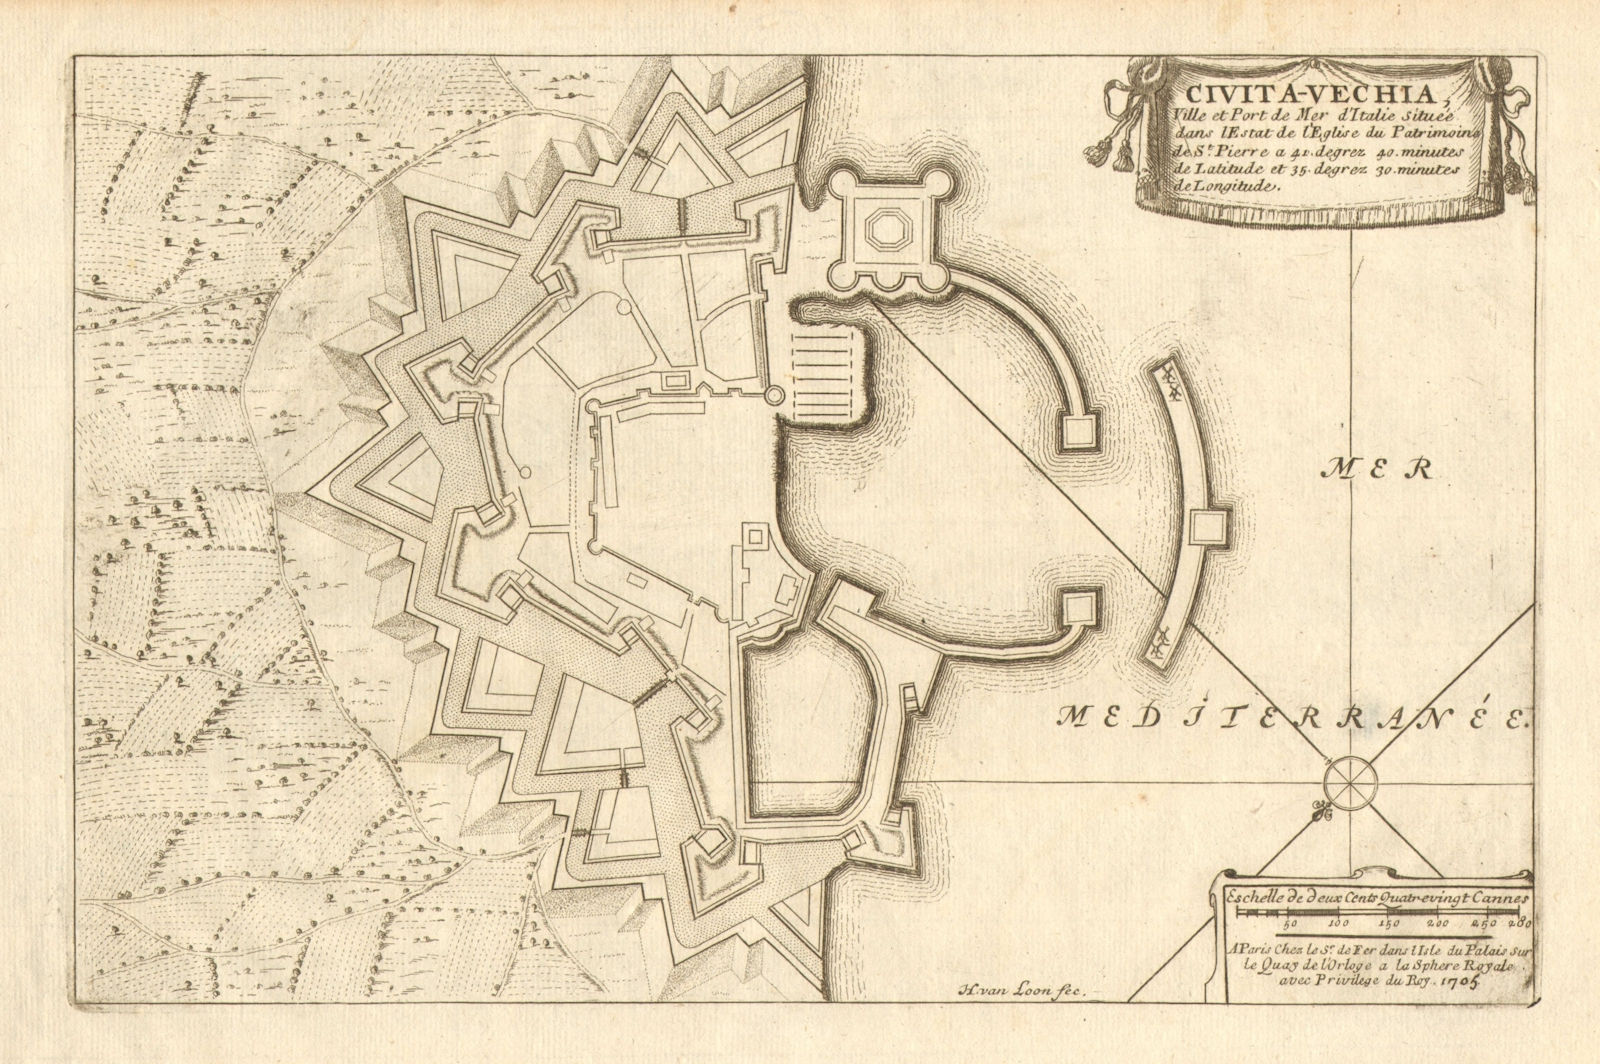 Associate Product 'Civita-Vechia'. Civitavecchia. Fortified town/city plan. Italy. DE FER 1705 map